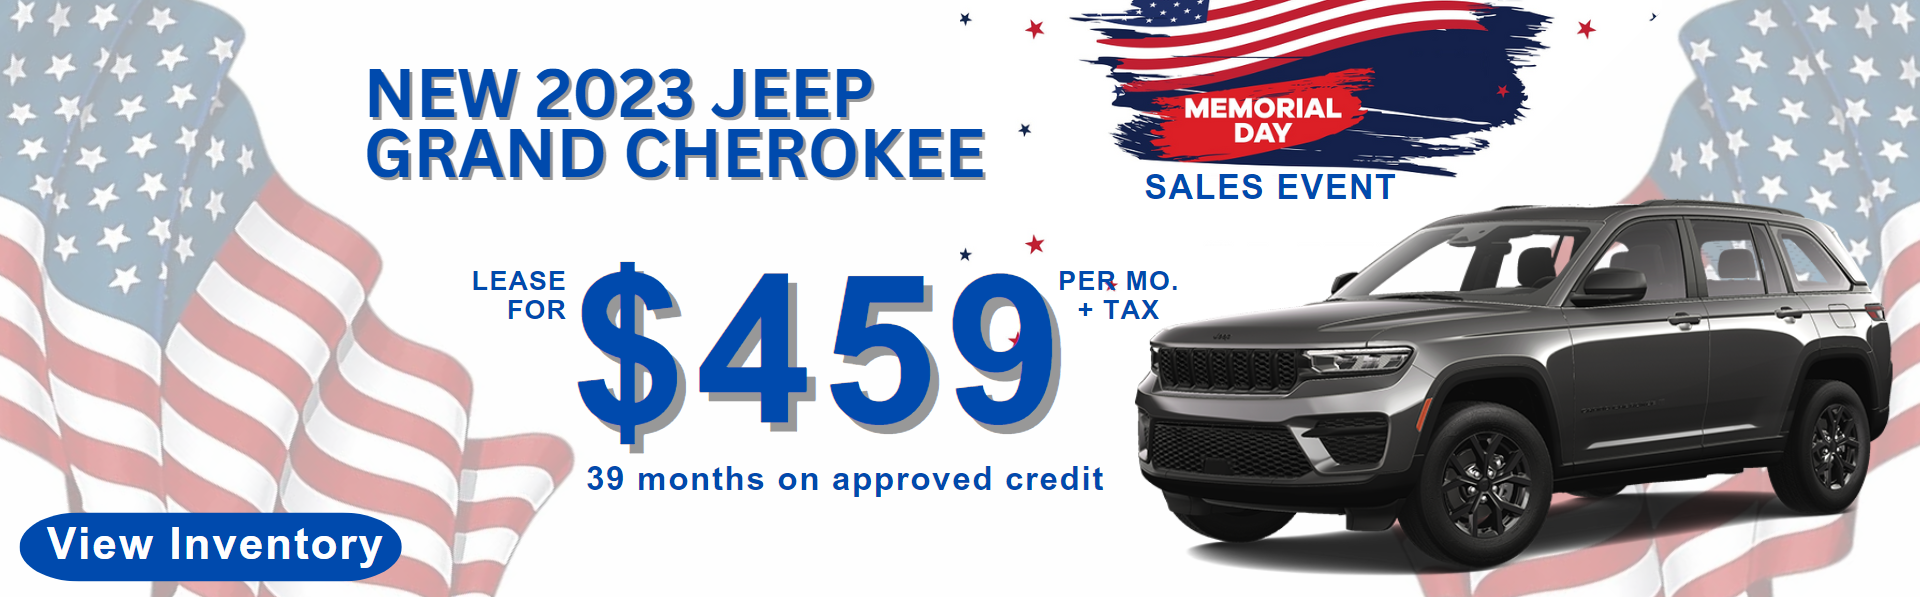 New 2023 Jeep Grand Cherokee Lease